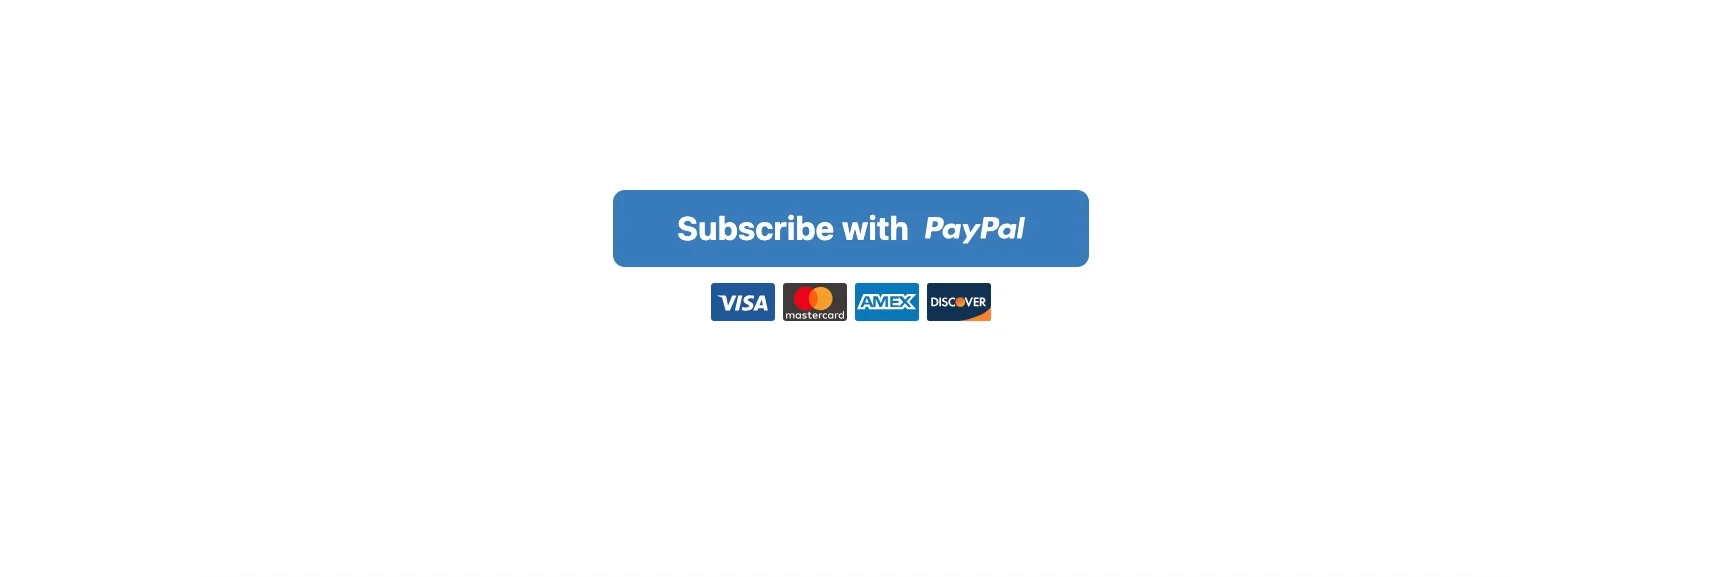 Elfsight PayPal example 3